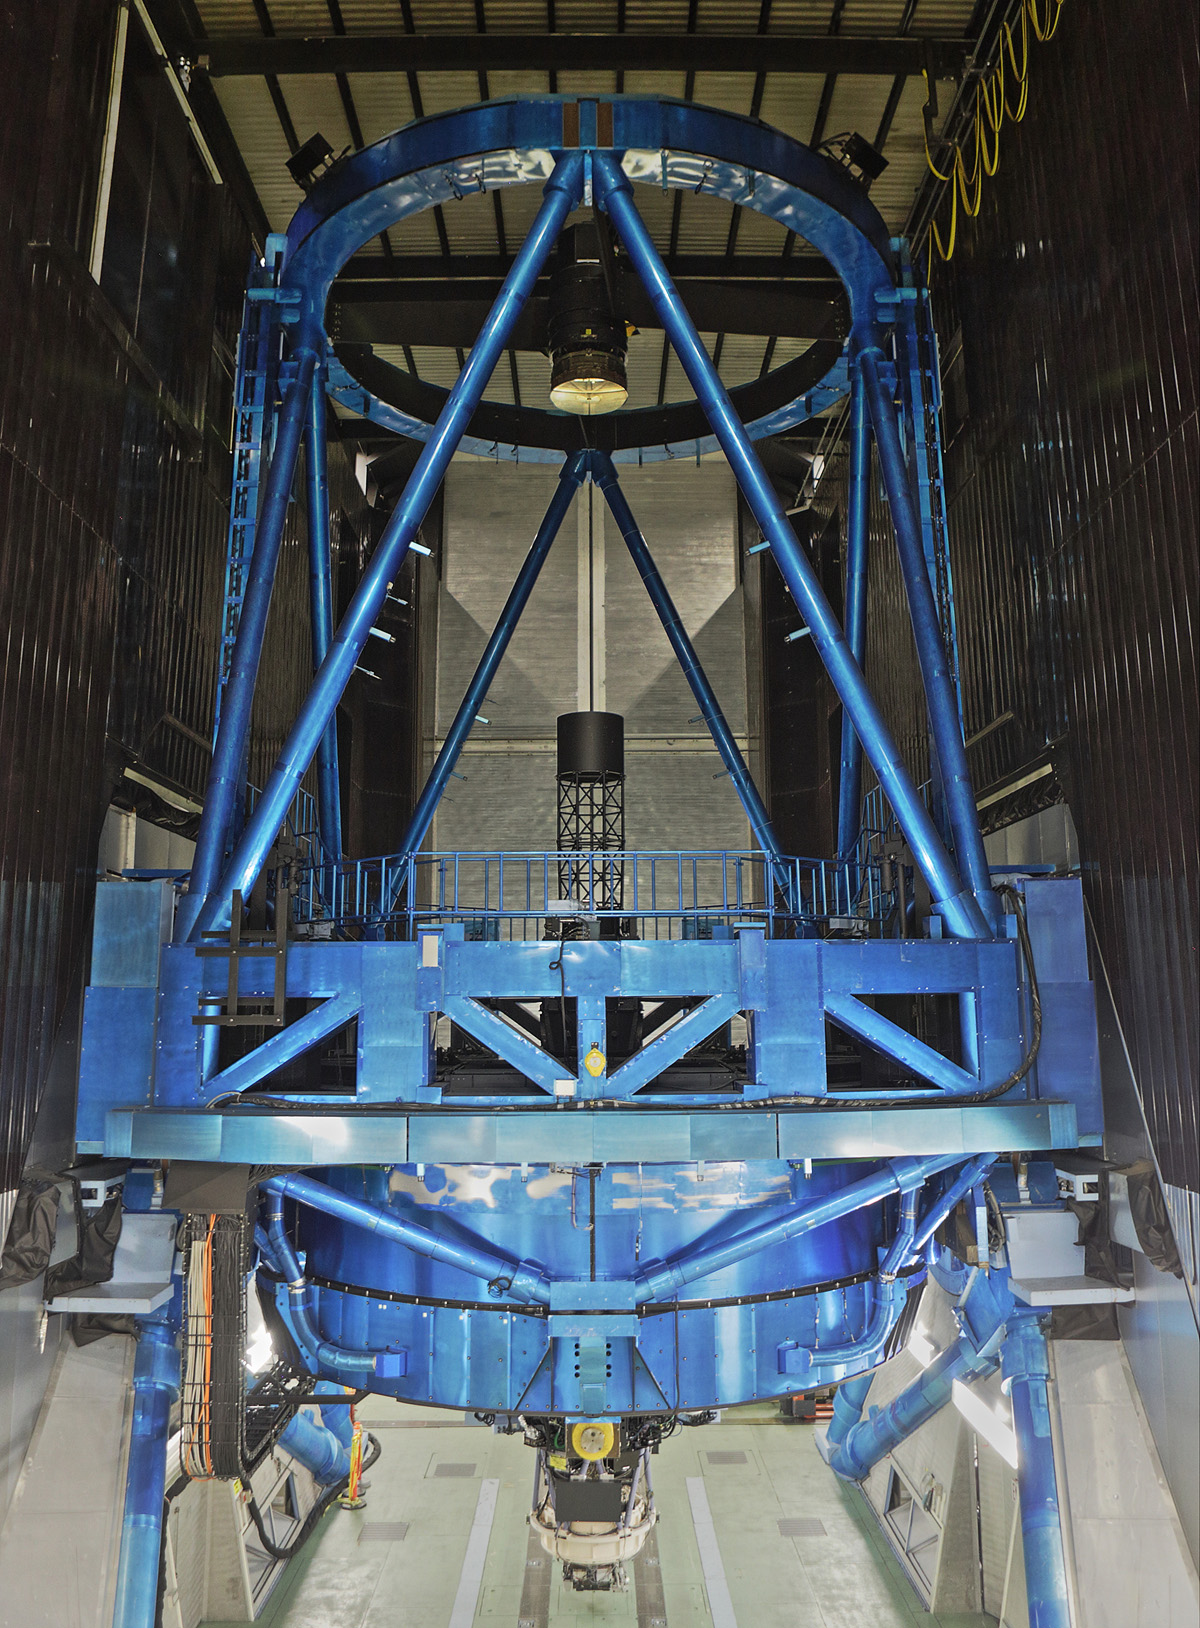 Subaru telescope from many stories above the floor